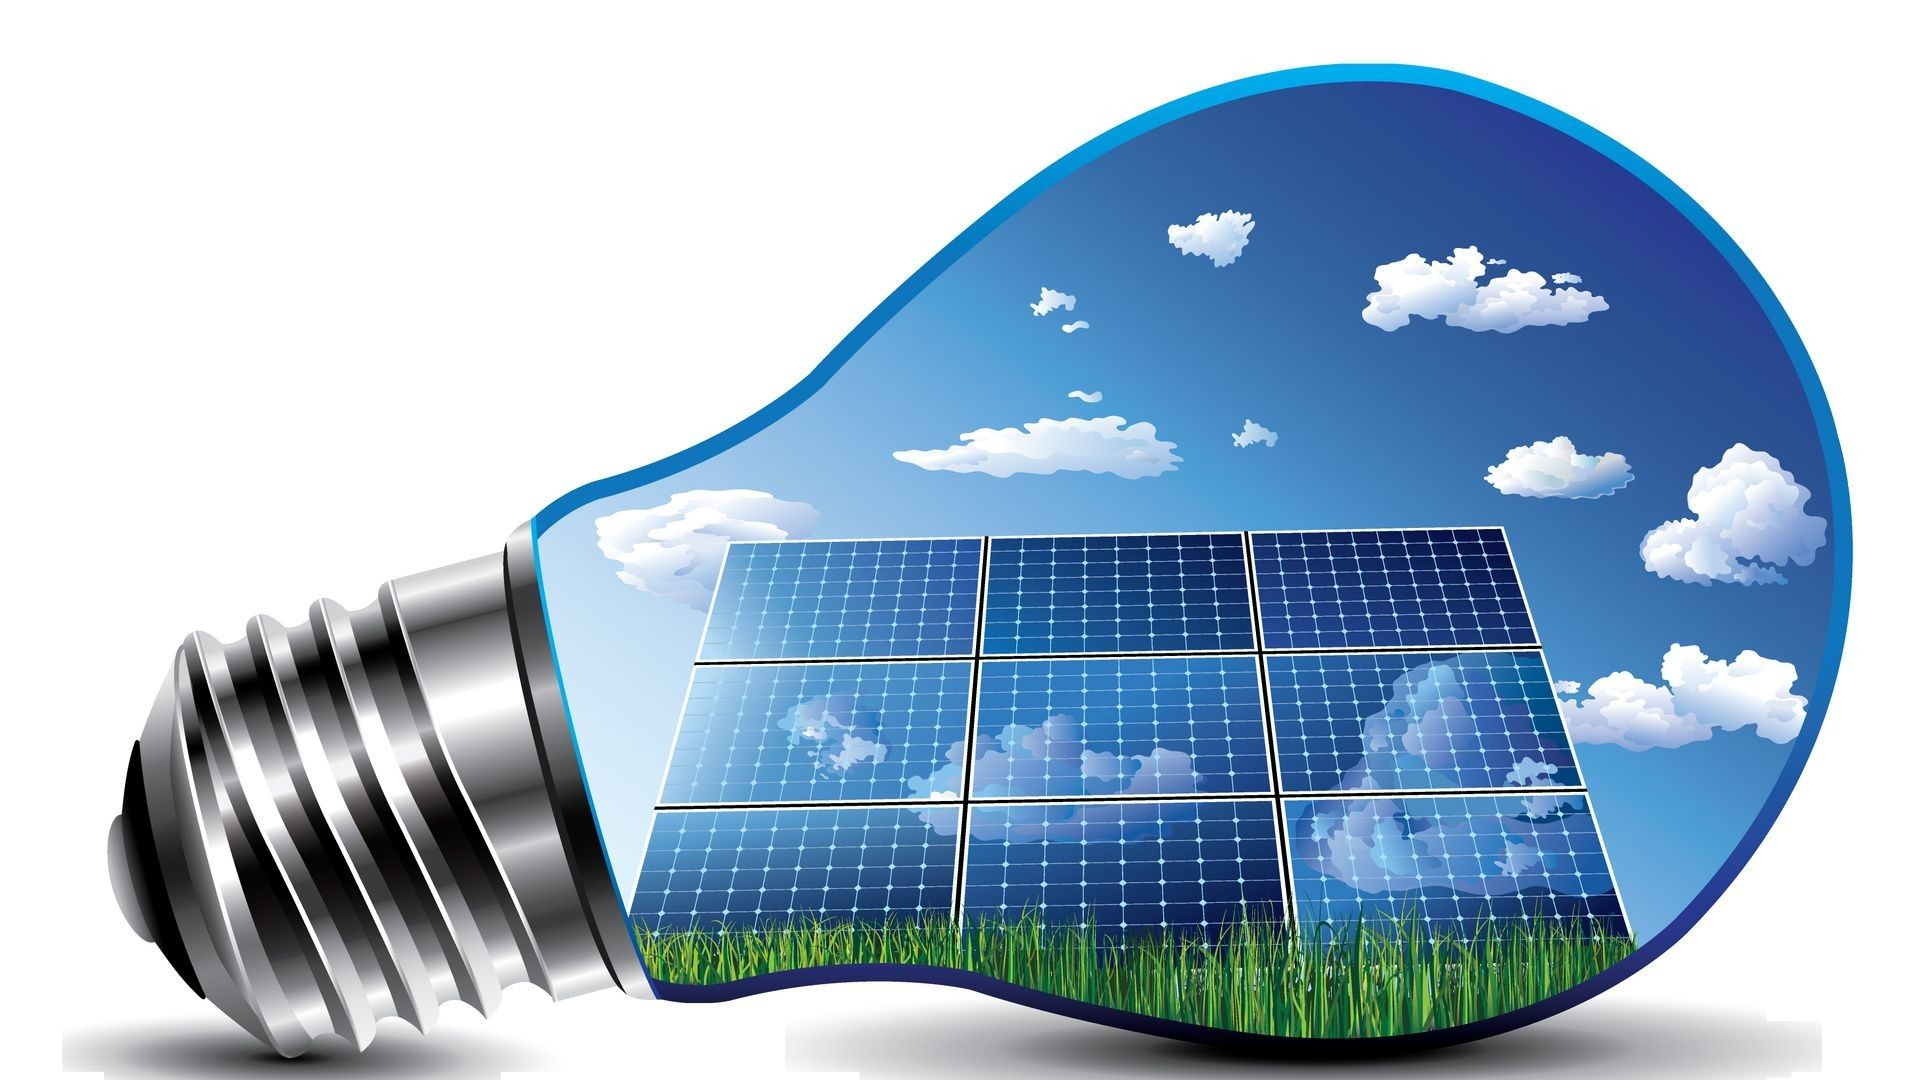 1920x1080 Luxury Renewable Energy Wallpaper | Free solar panels, Small solar panels, Buy solar panels